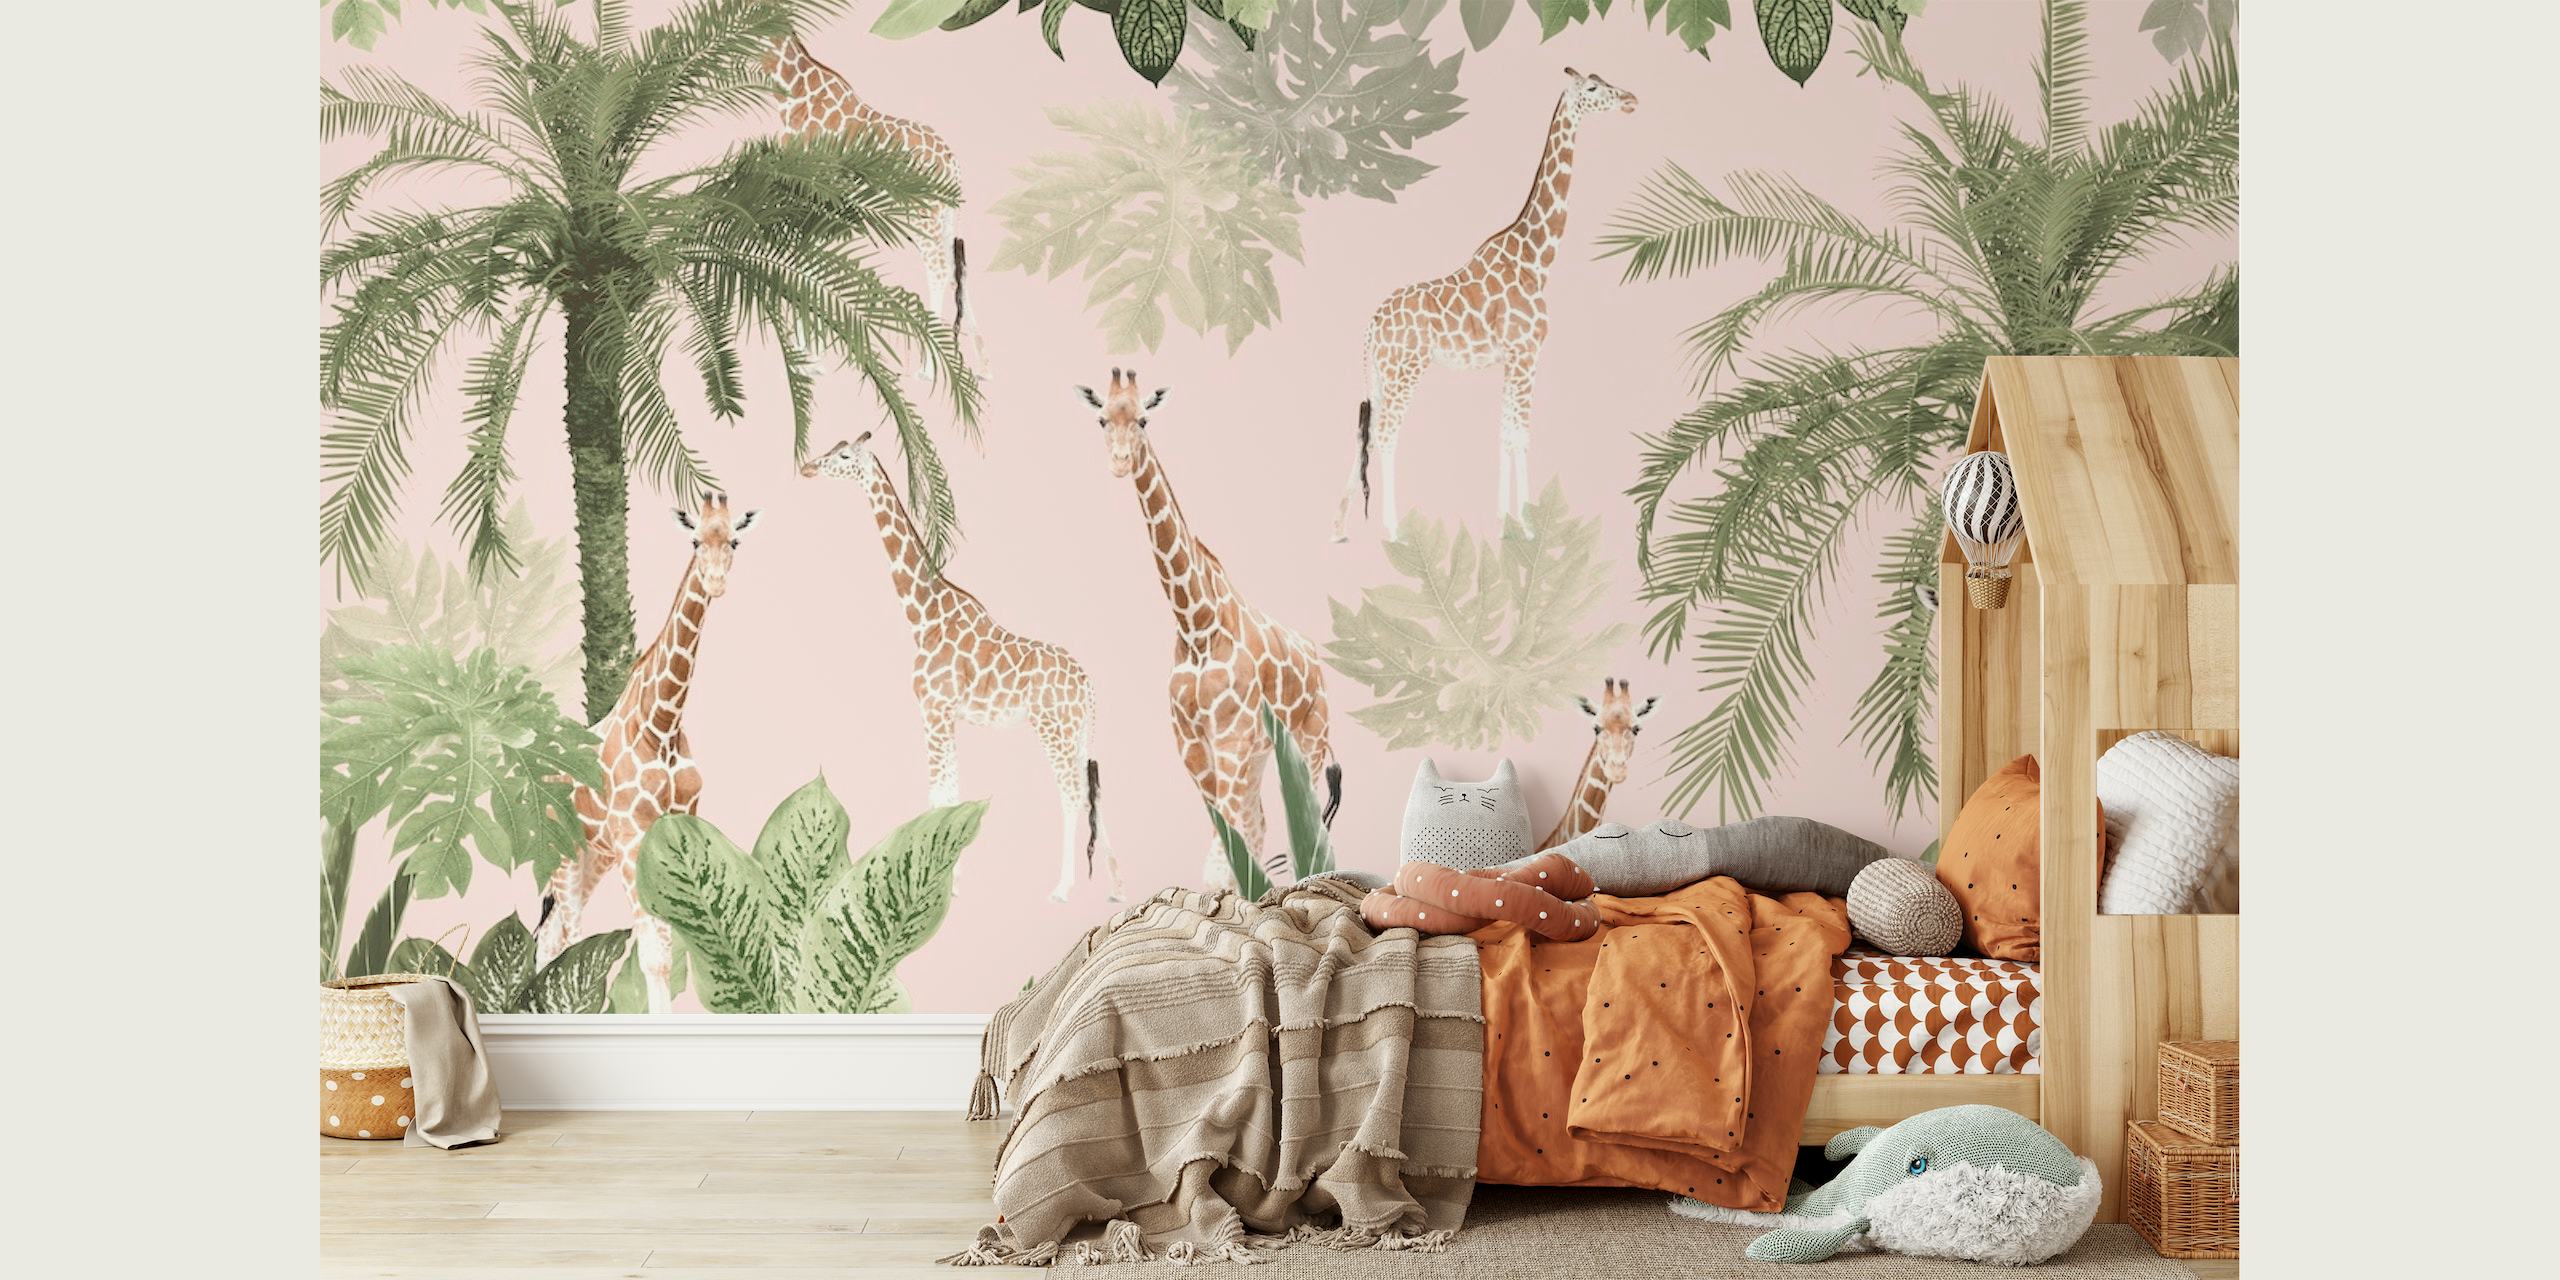 Giraffes in the Jungle 2 wallpaper